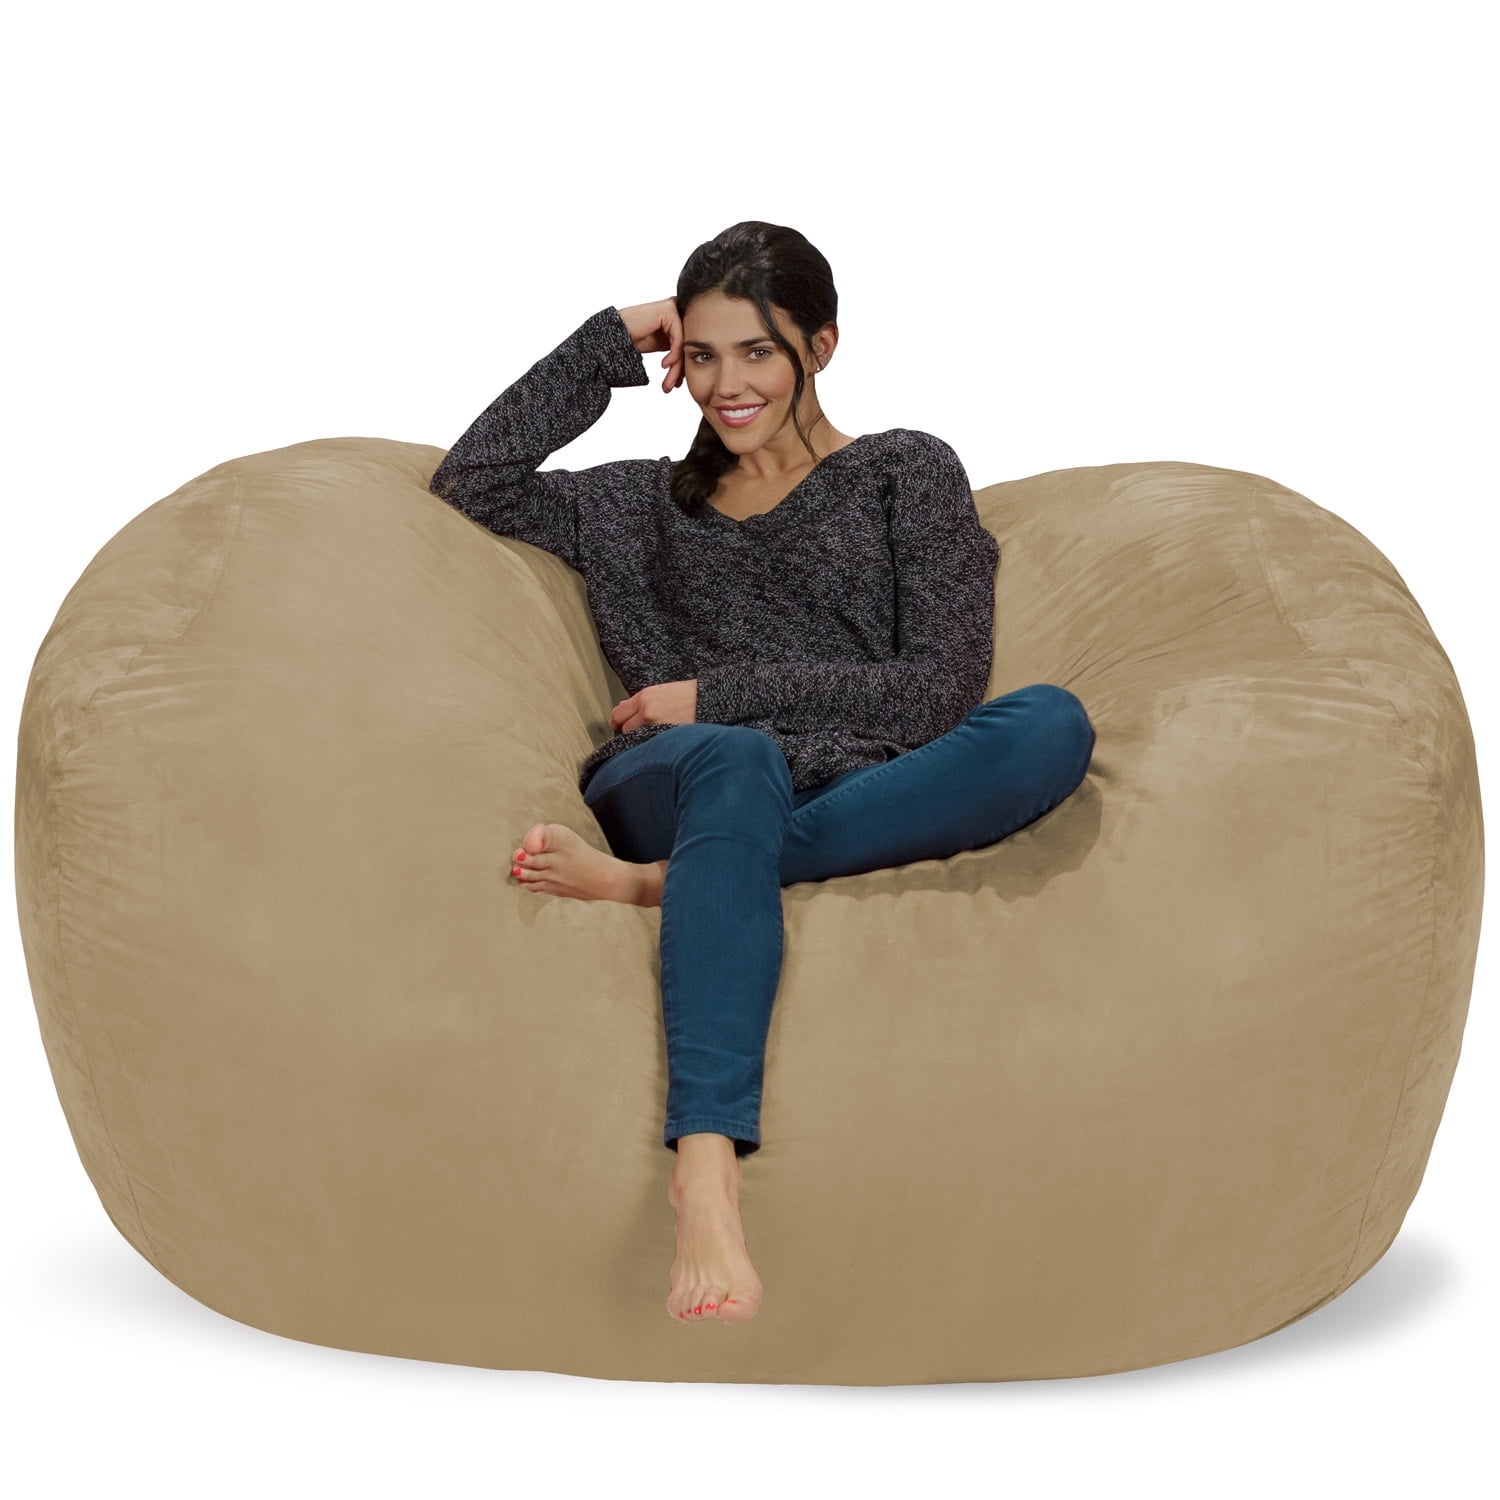 Chill Sacks - Bean Bag Chairs and Beanbag furniture – Chillsacks